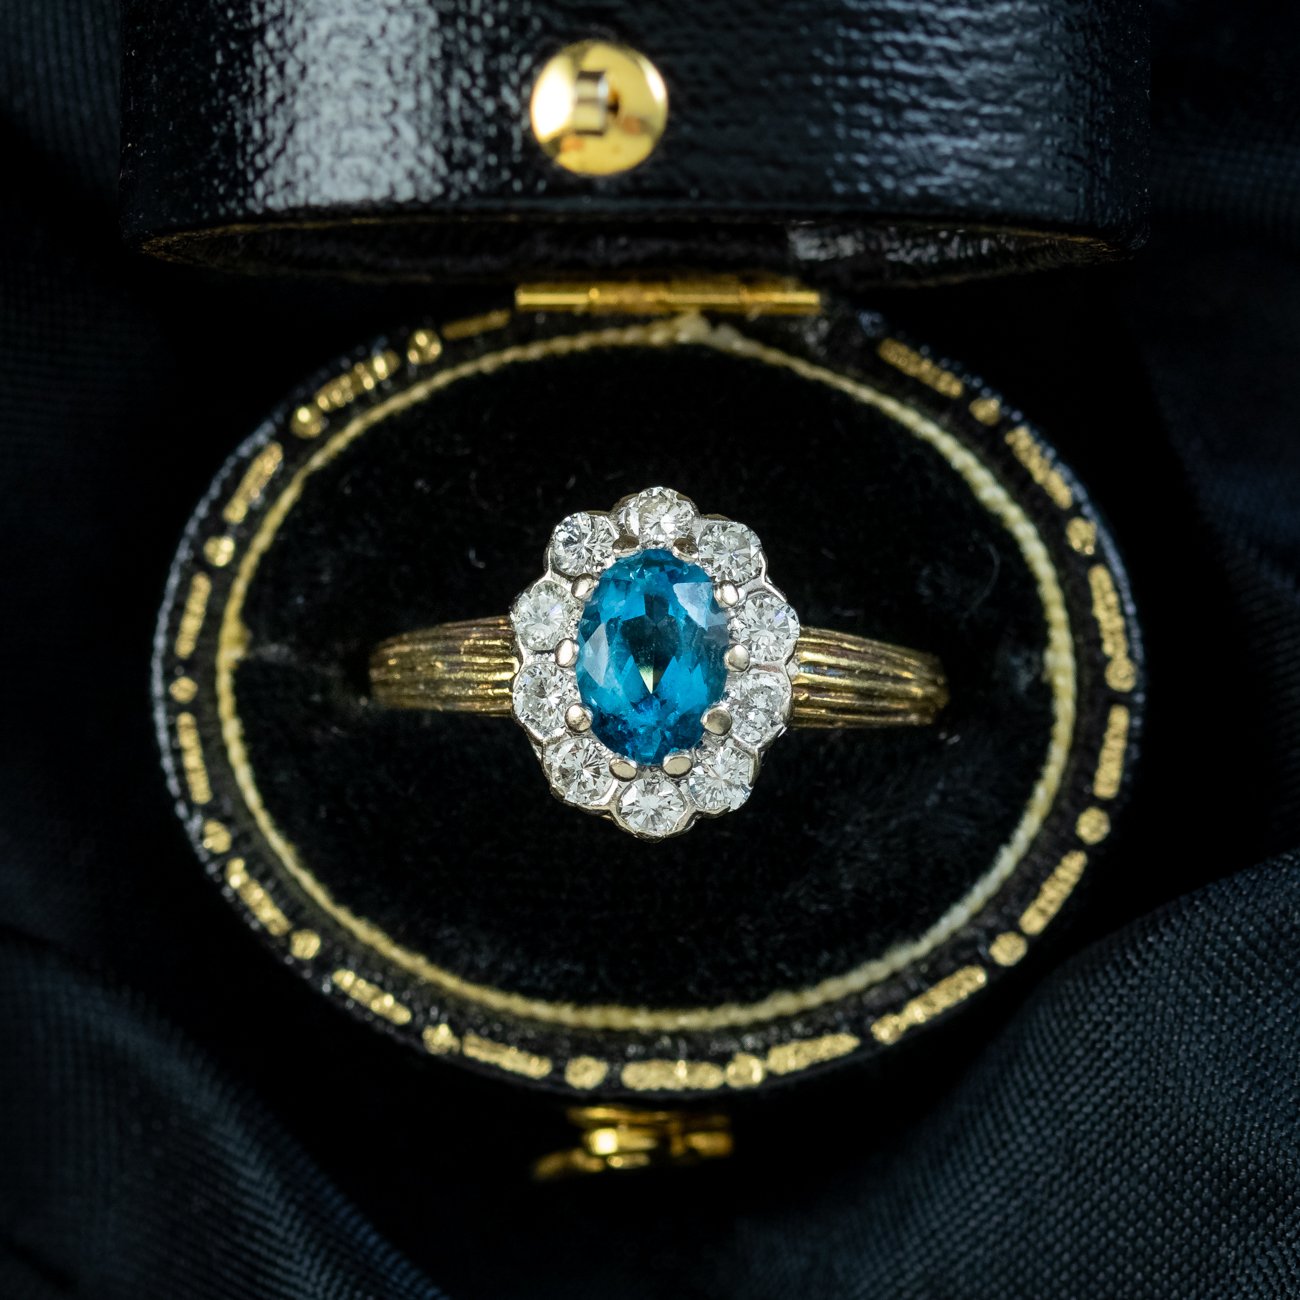 Vintage Blue Zircon Diamond Cluster Ring Dated 1983